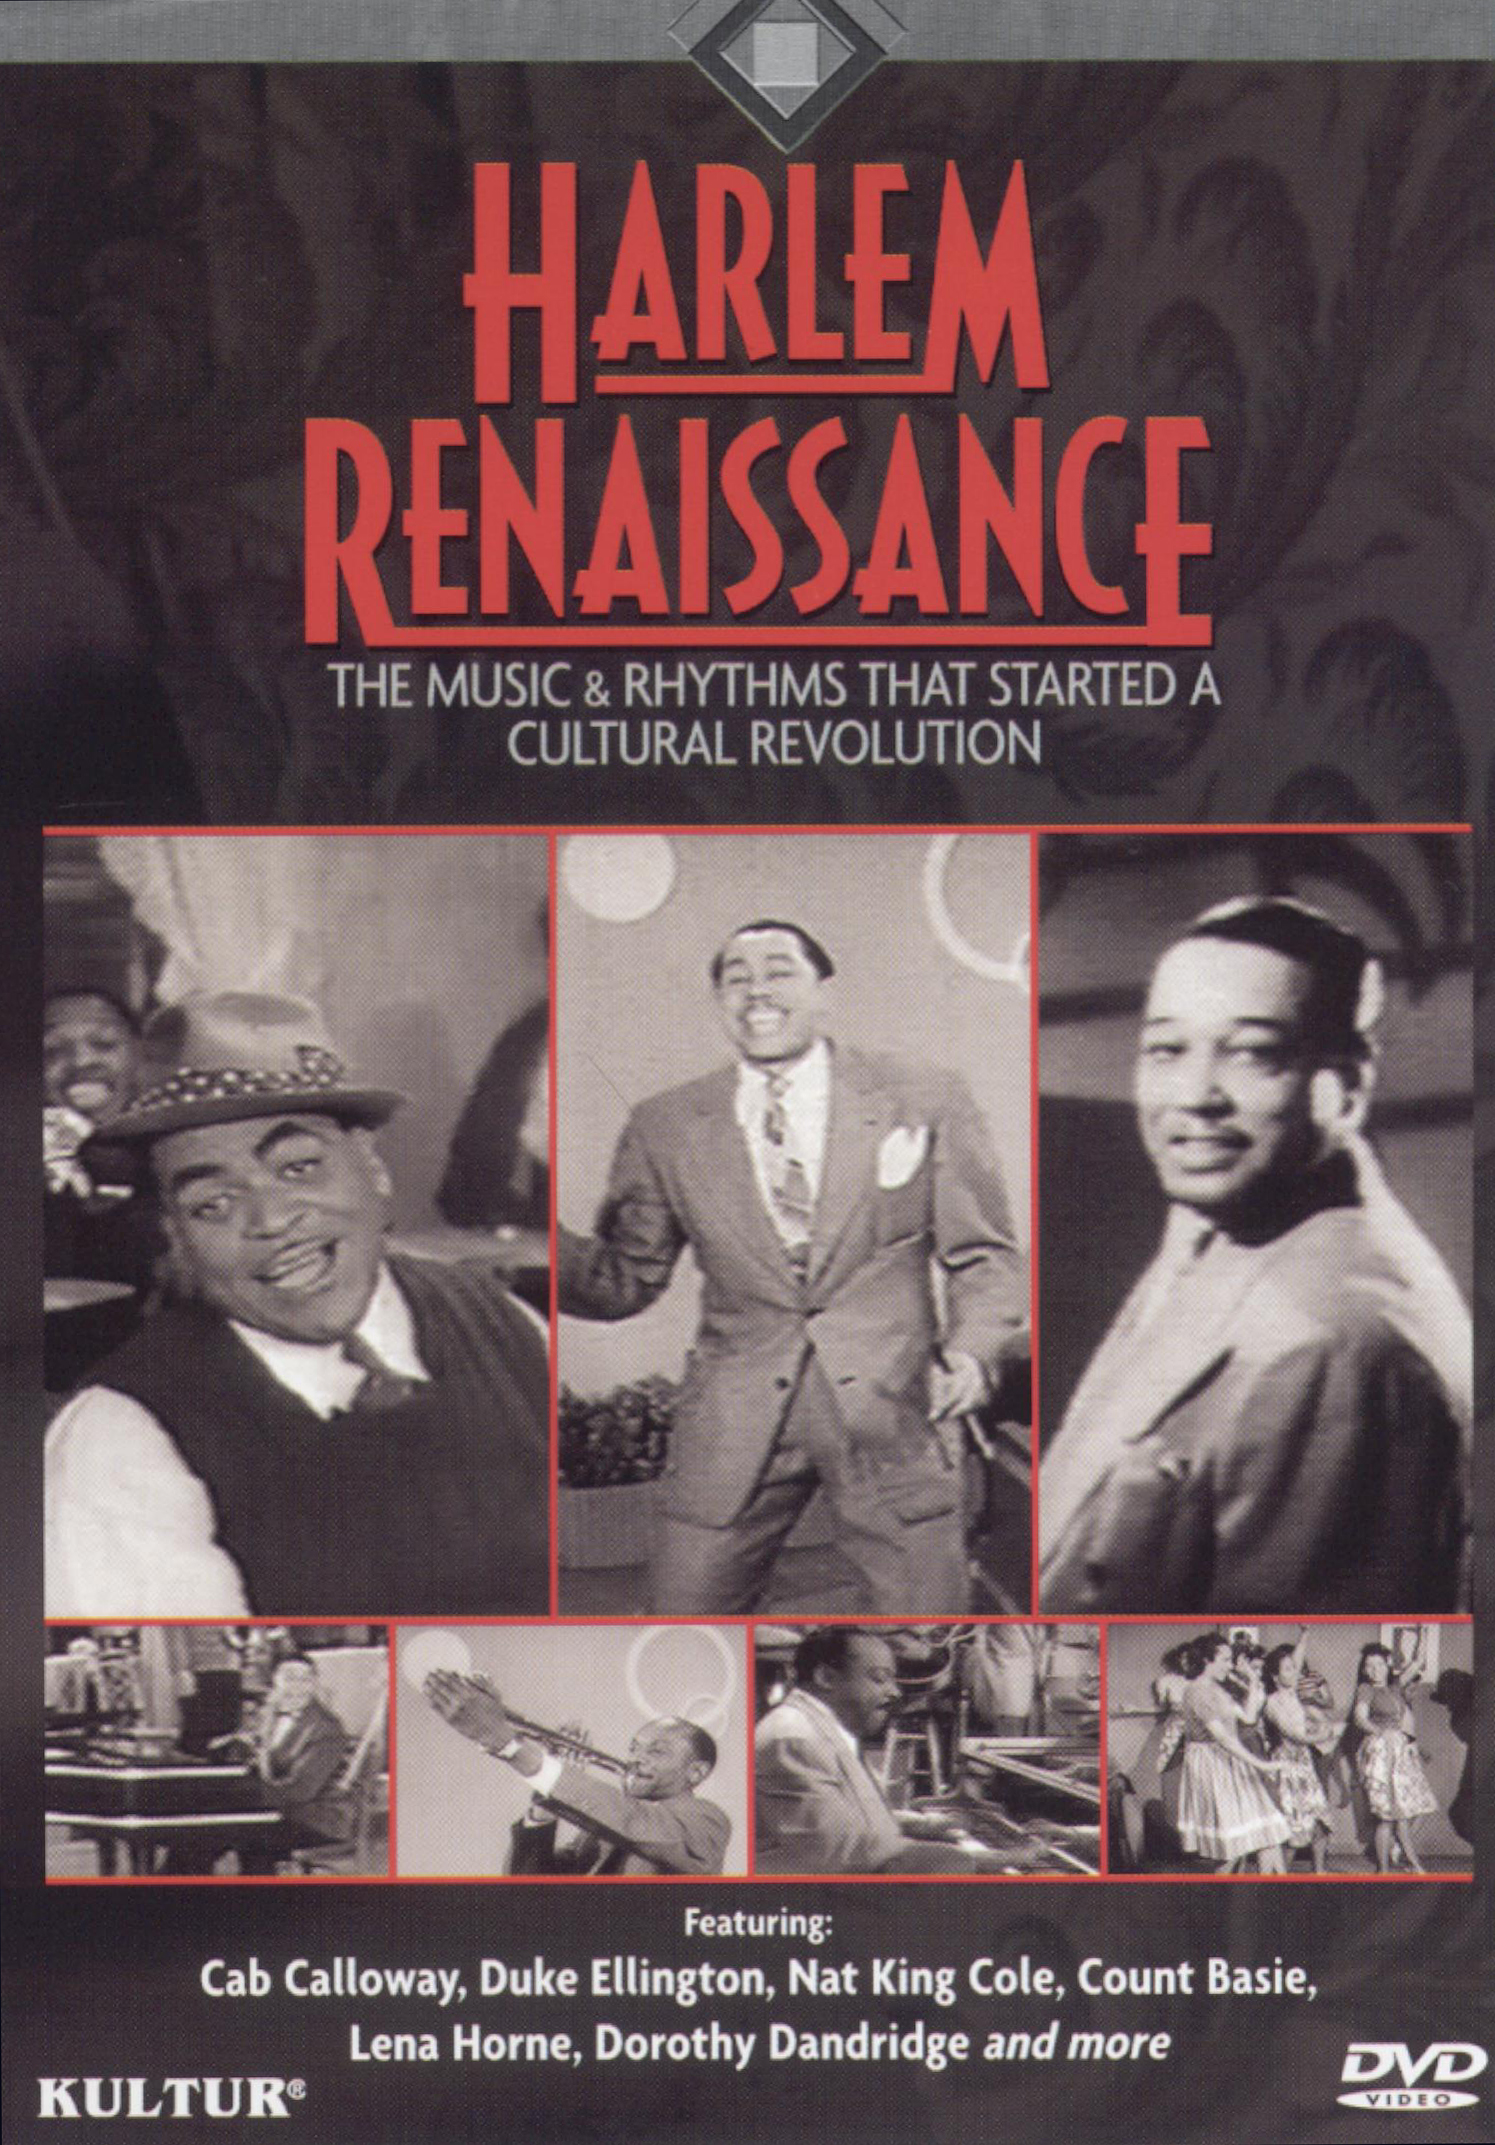 Characteristics Of The Harlem Renaissance